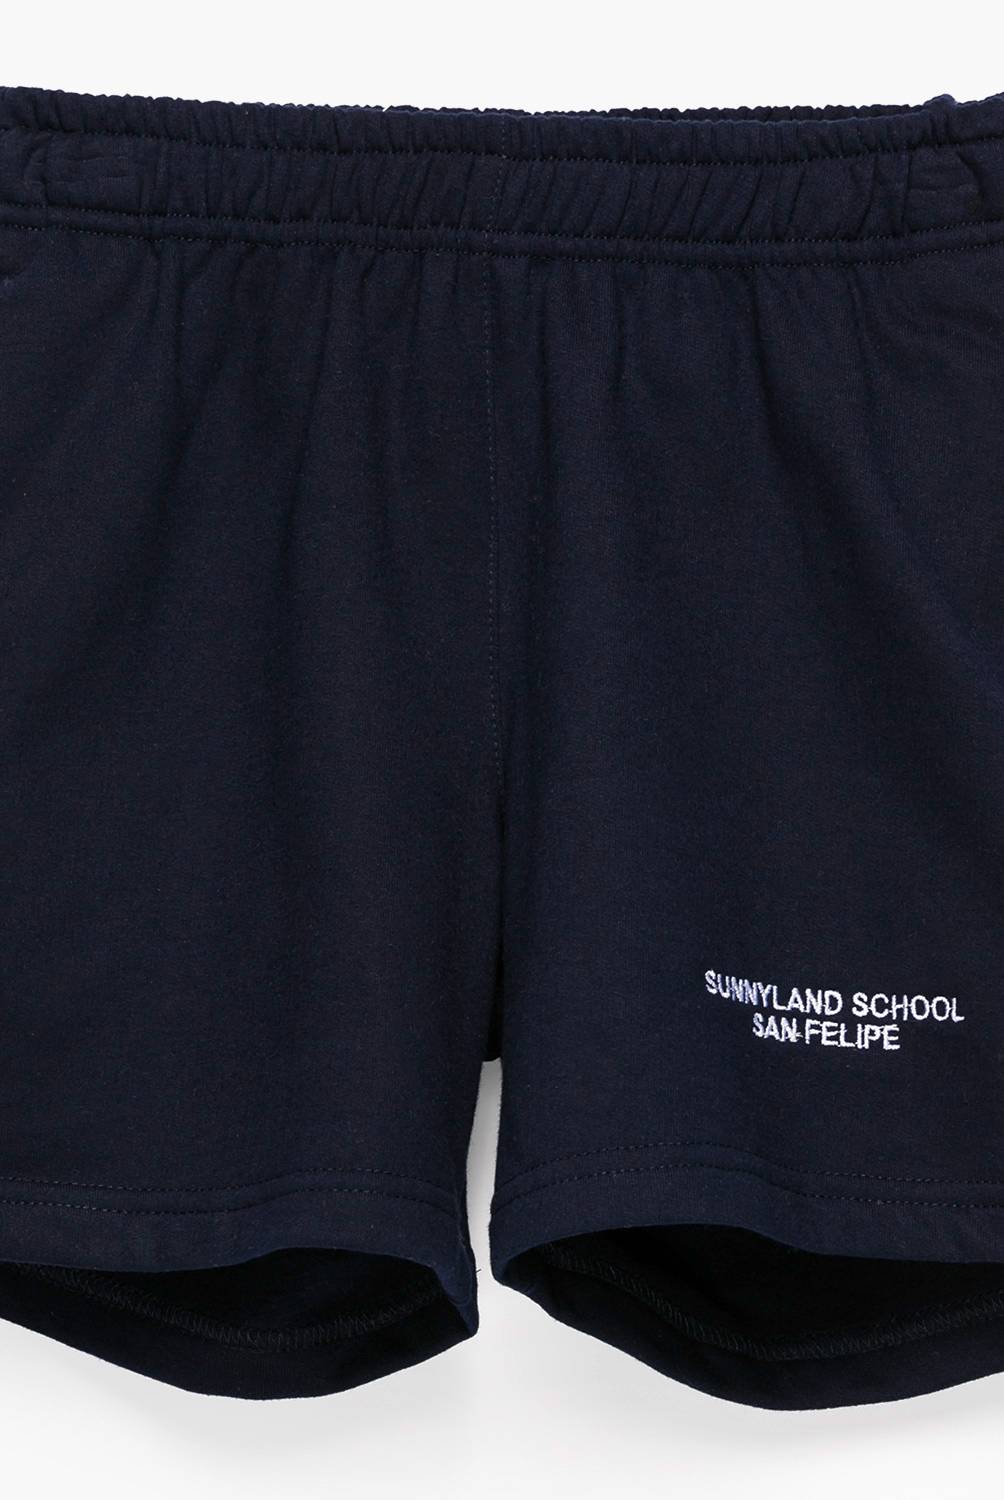 SUNNYLAND SCHOOL - Short Escolar 65 Algodón 35 Poliéster Pretina Elásticada Bolsillo A Los Costados Niño Sunnyland School